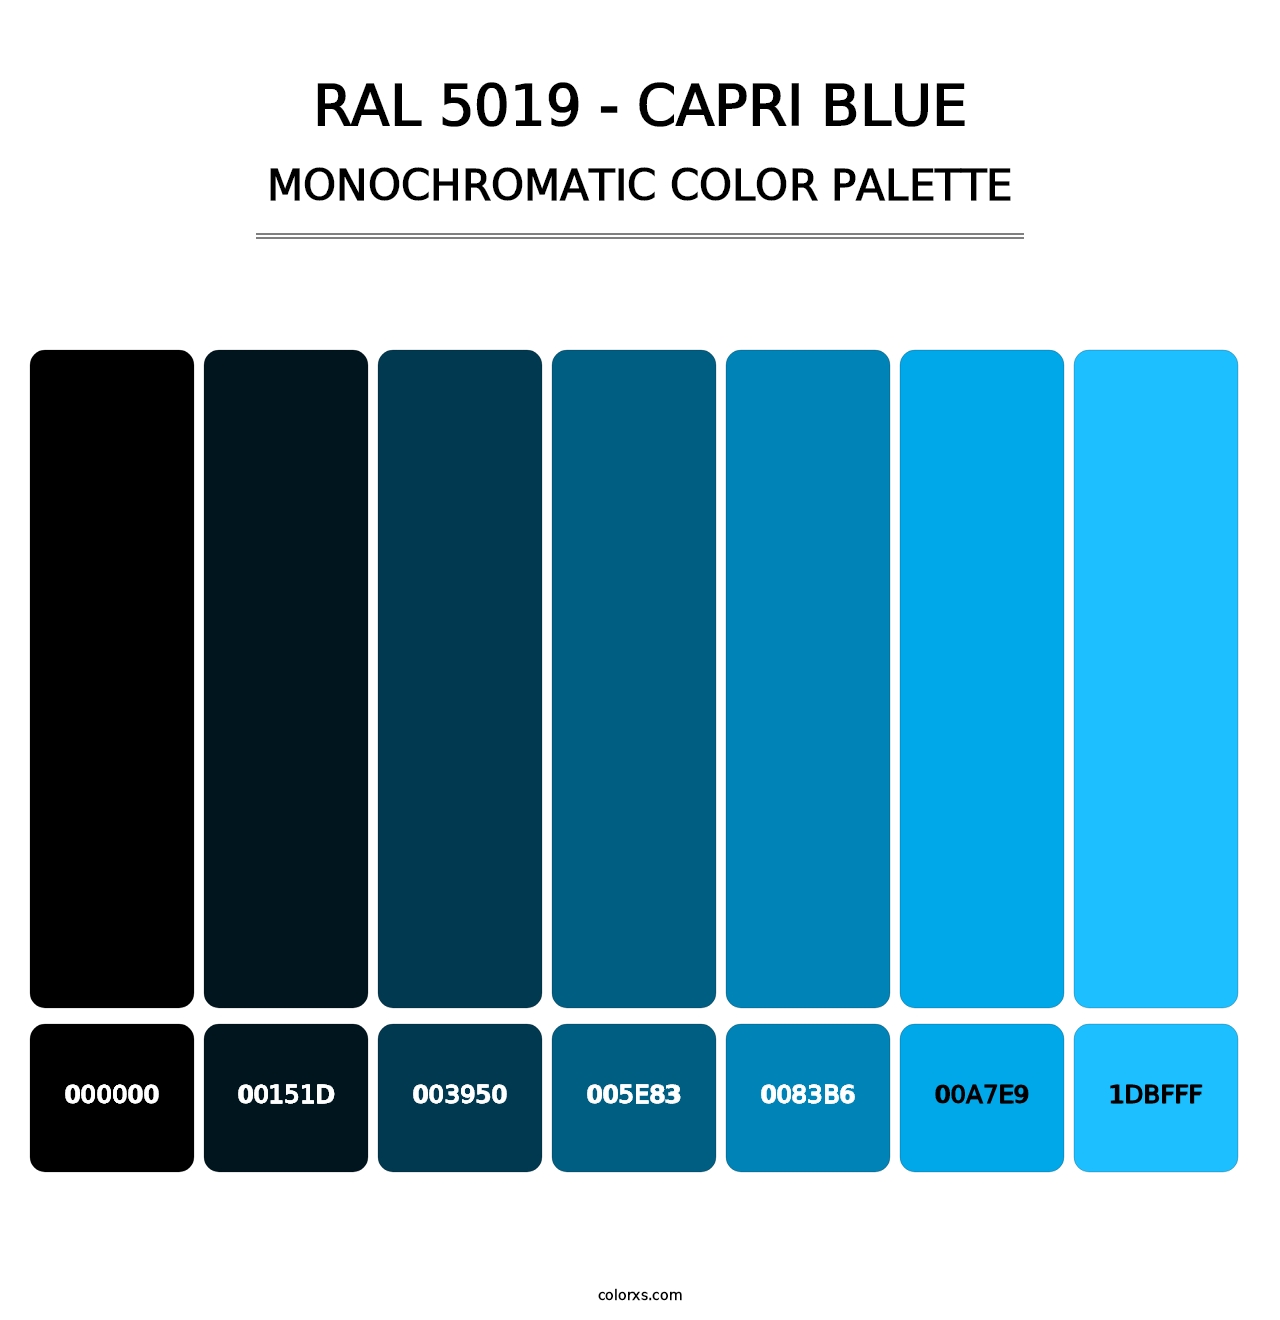 RAL 5019 - Capri Blue - Monochromatic Color Palette